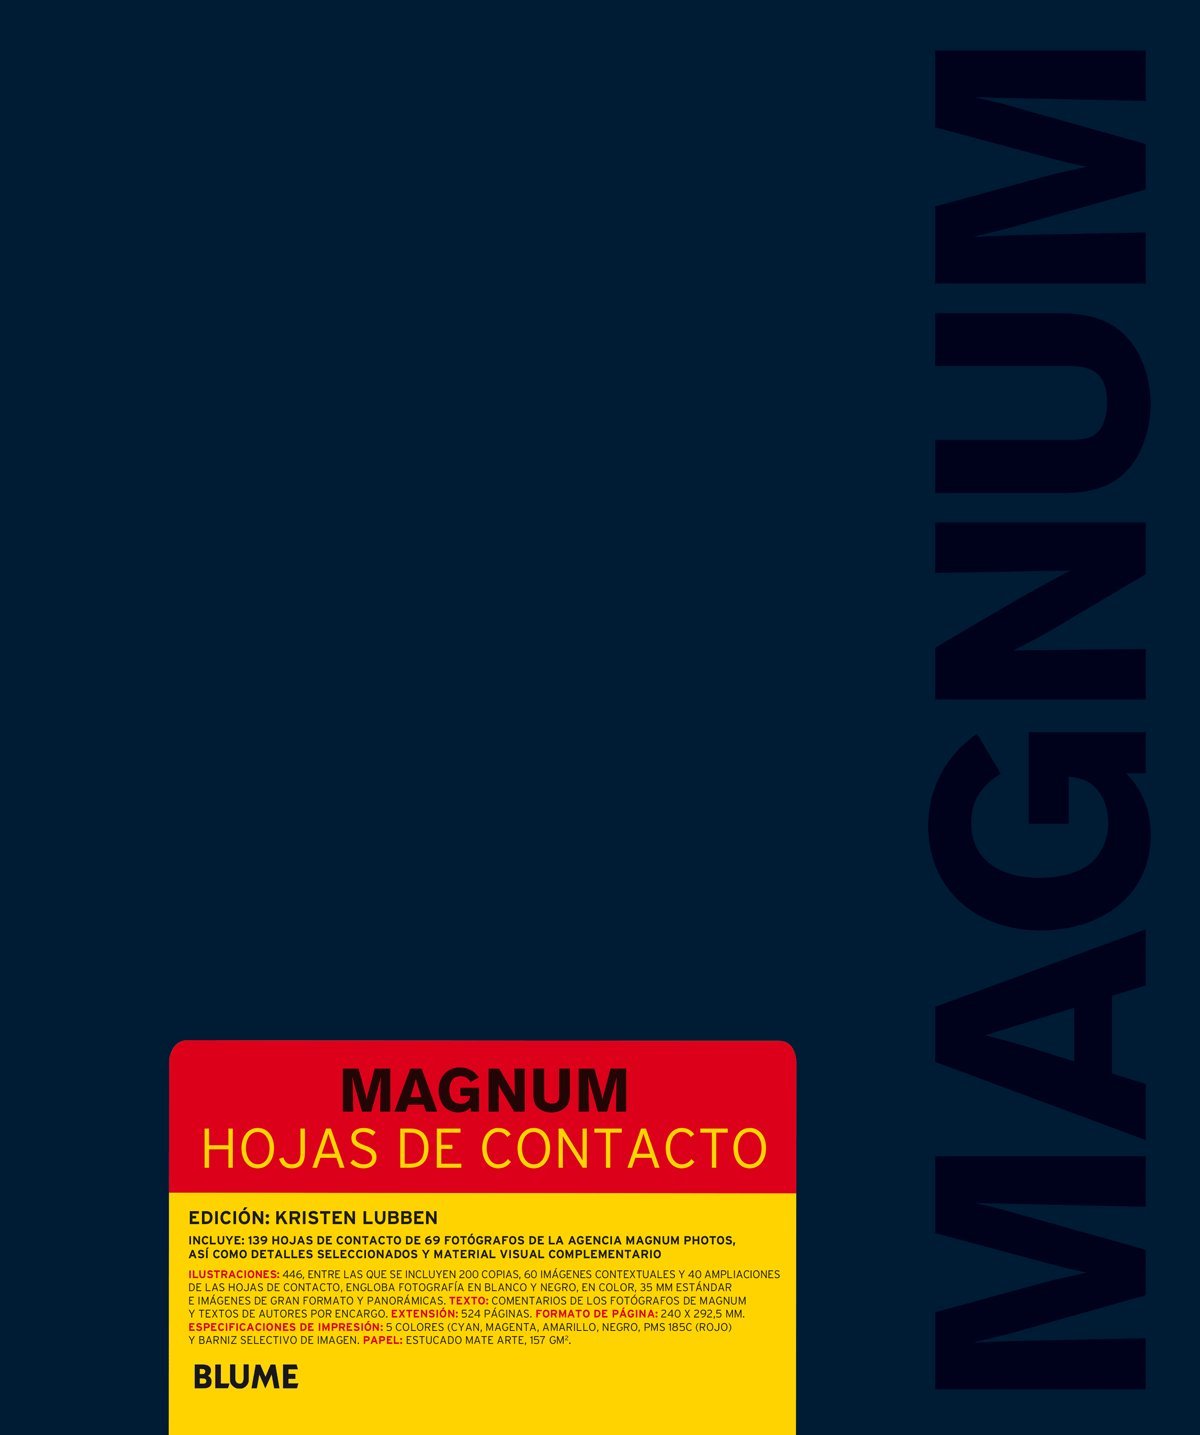 Libro :“Magnum” por Kristen Lubben